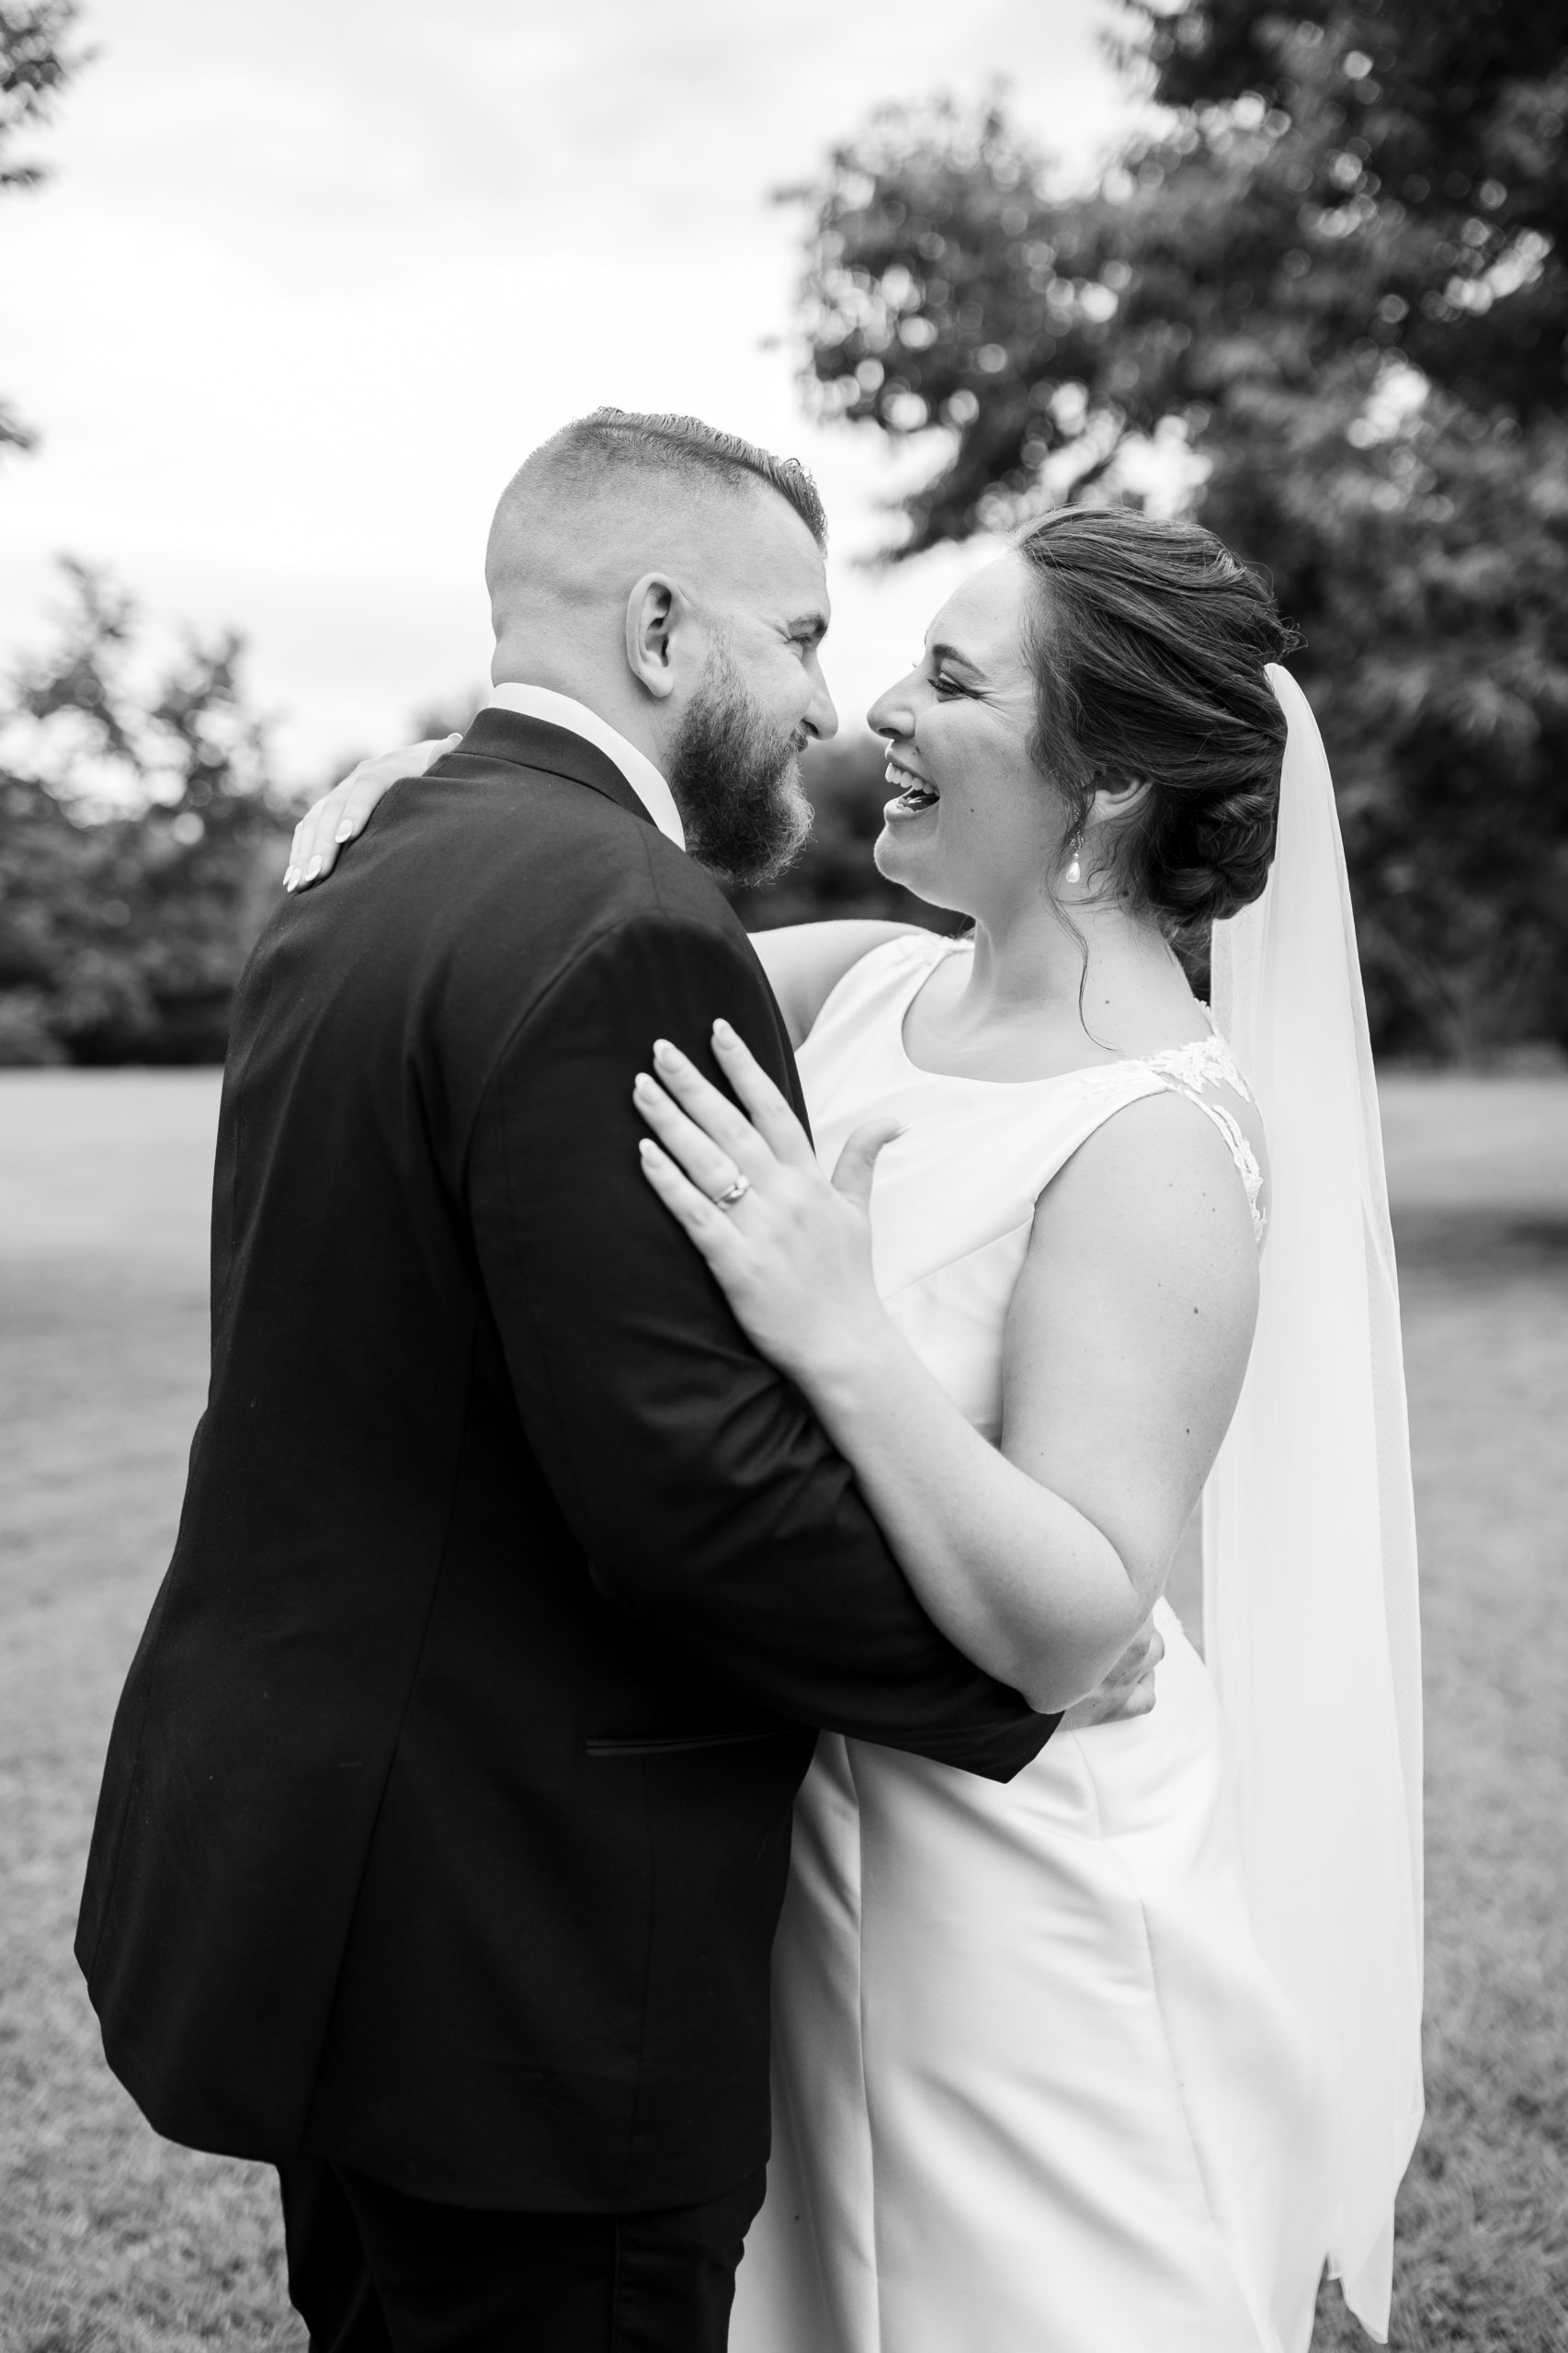 Couple embracing during wedding portrait session - Luxury Wedding Photographer - Wedding Photographer DMV